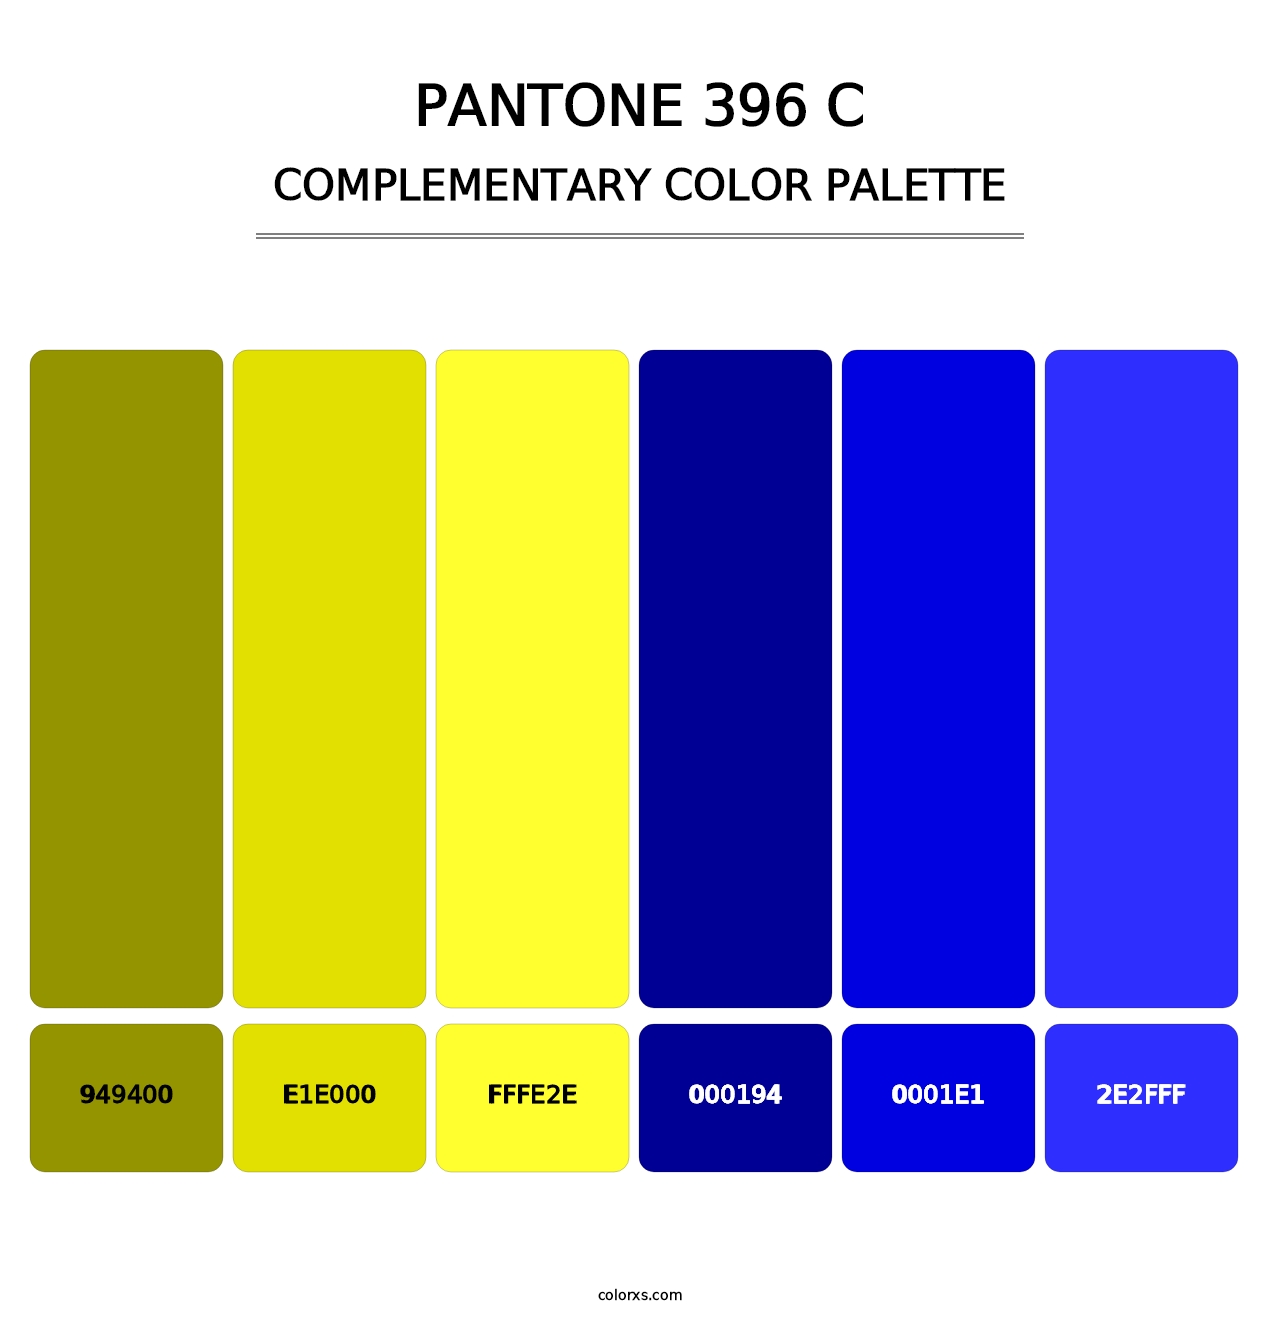 PANTONE 396 C - Complementary Color Palette